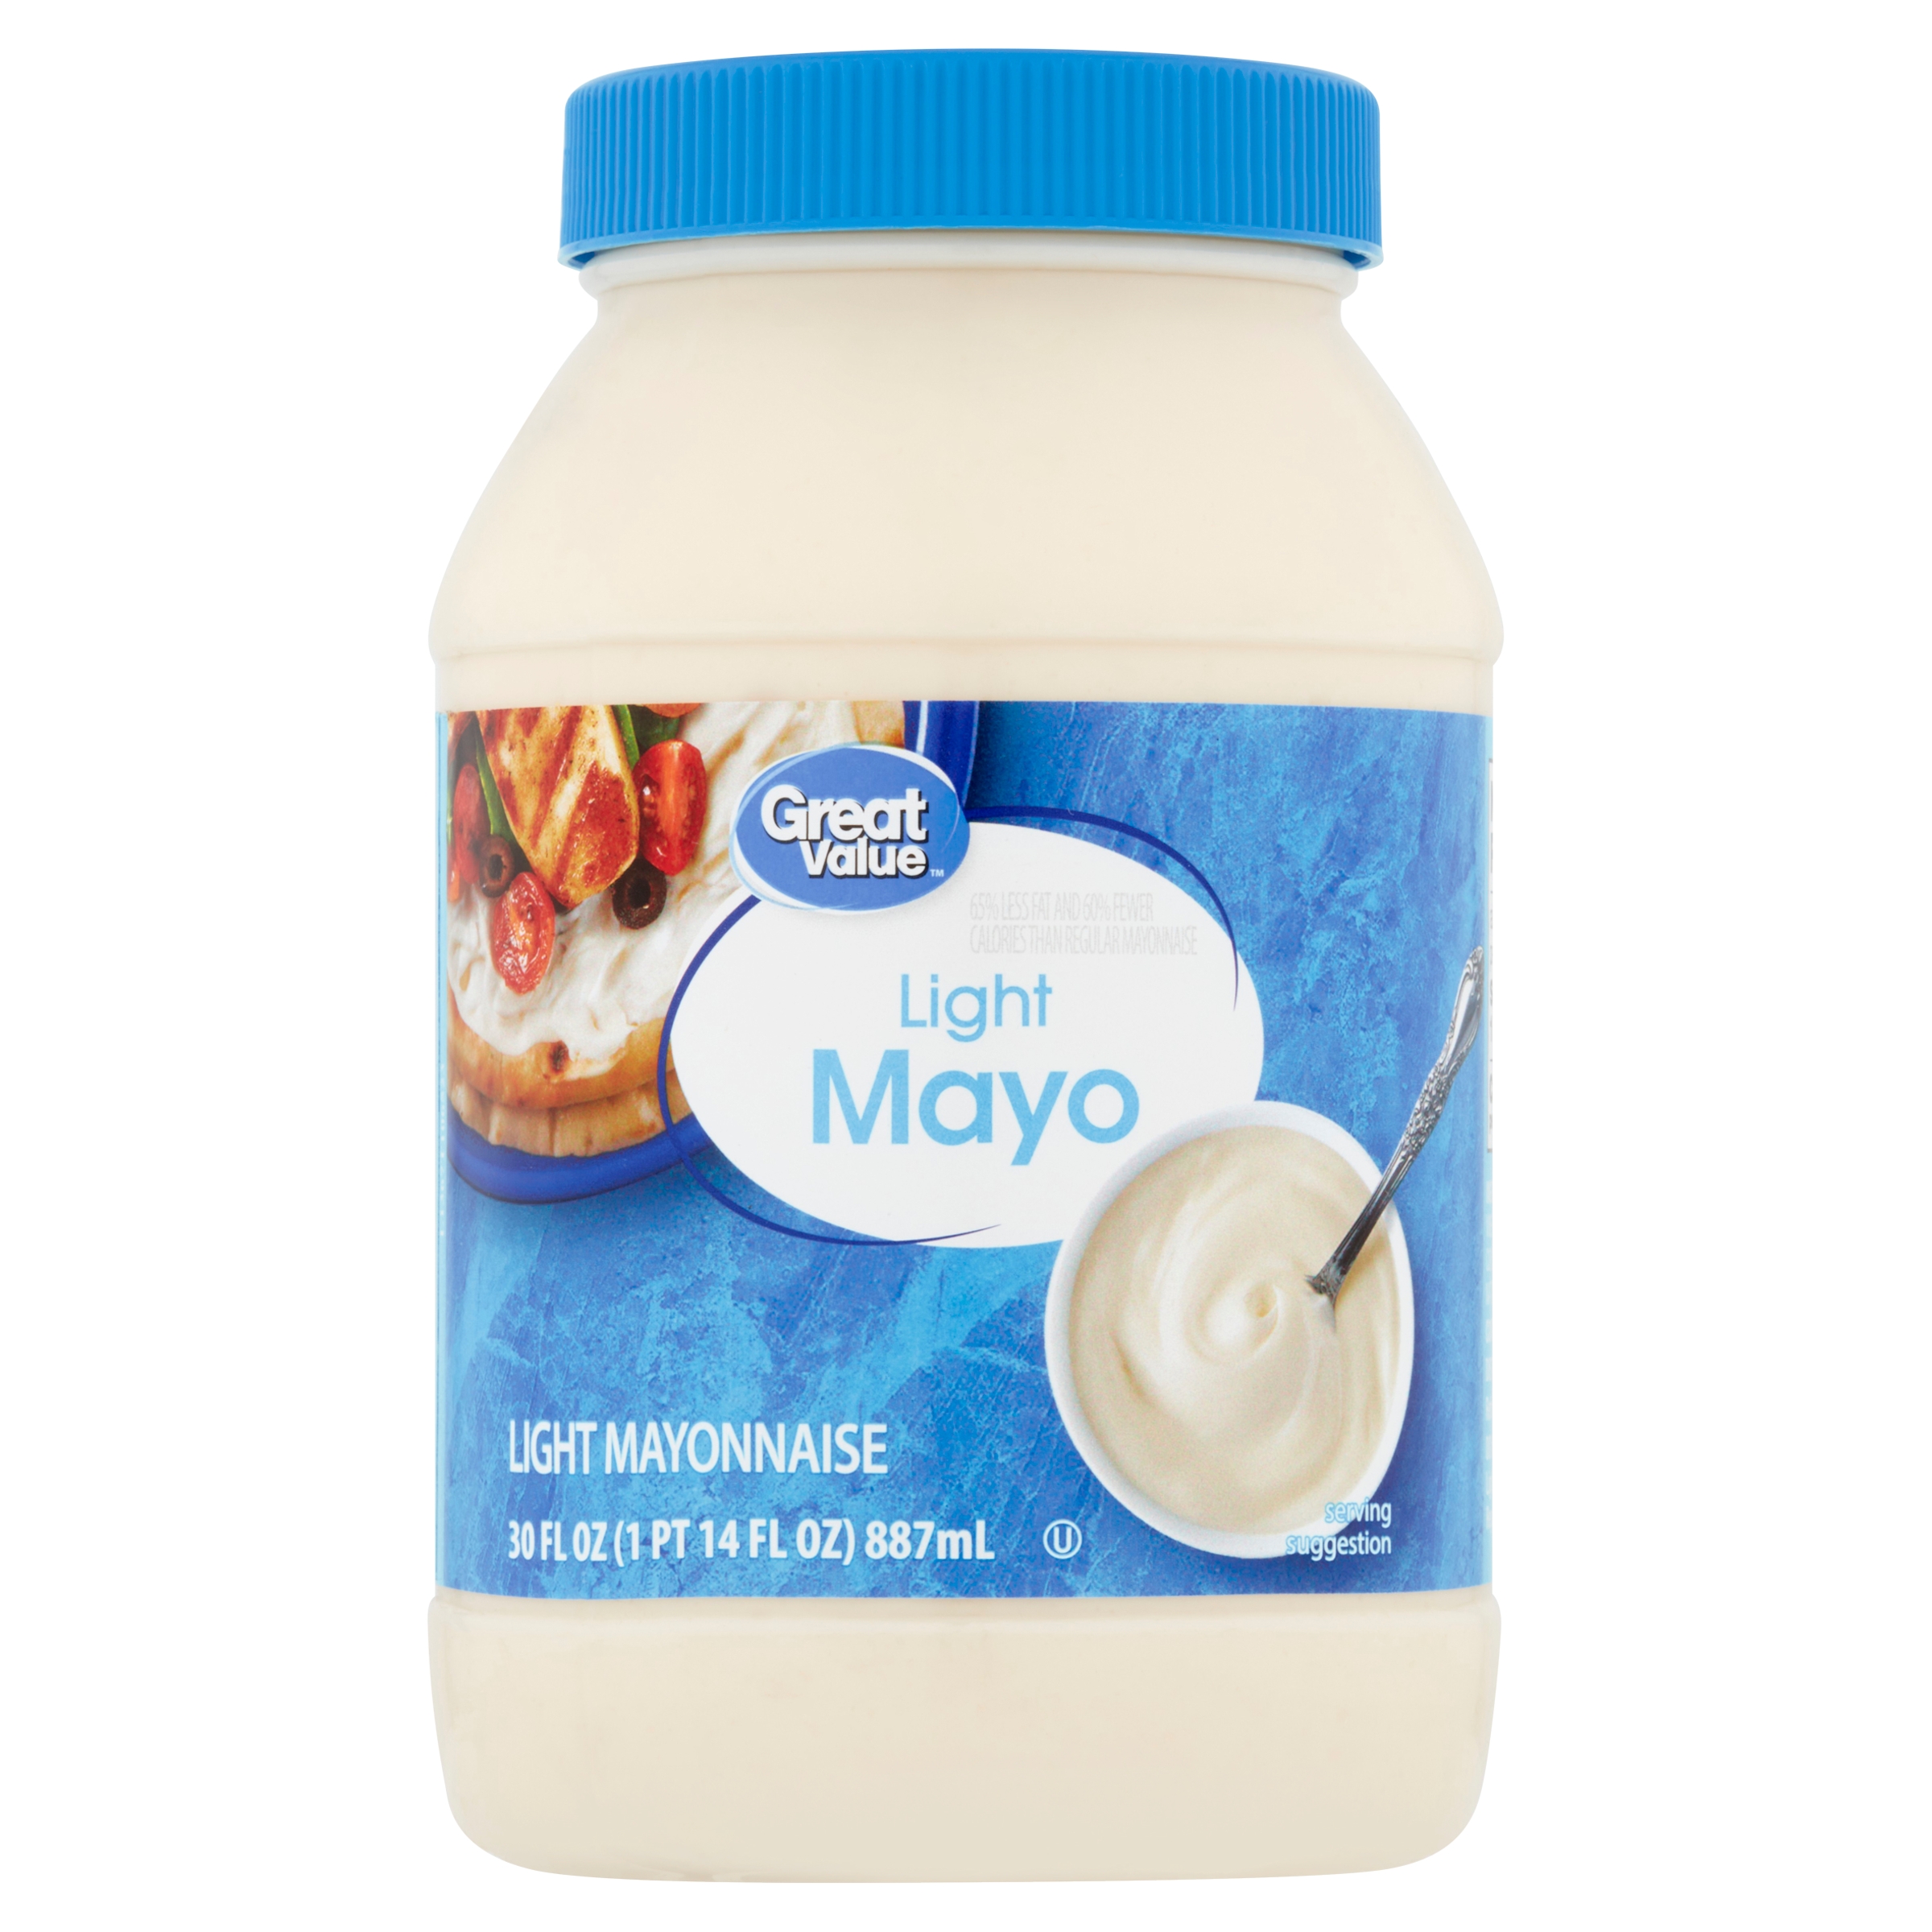 Great Value Light Mayonnaise, 30 fl oz - image 1 of 7